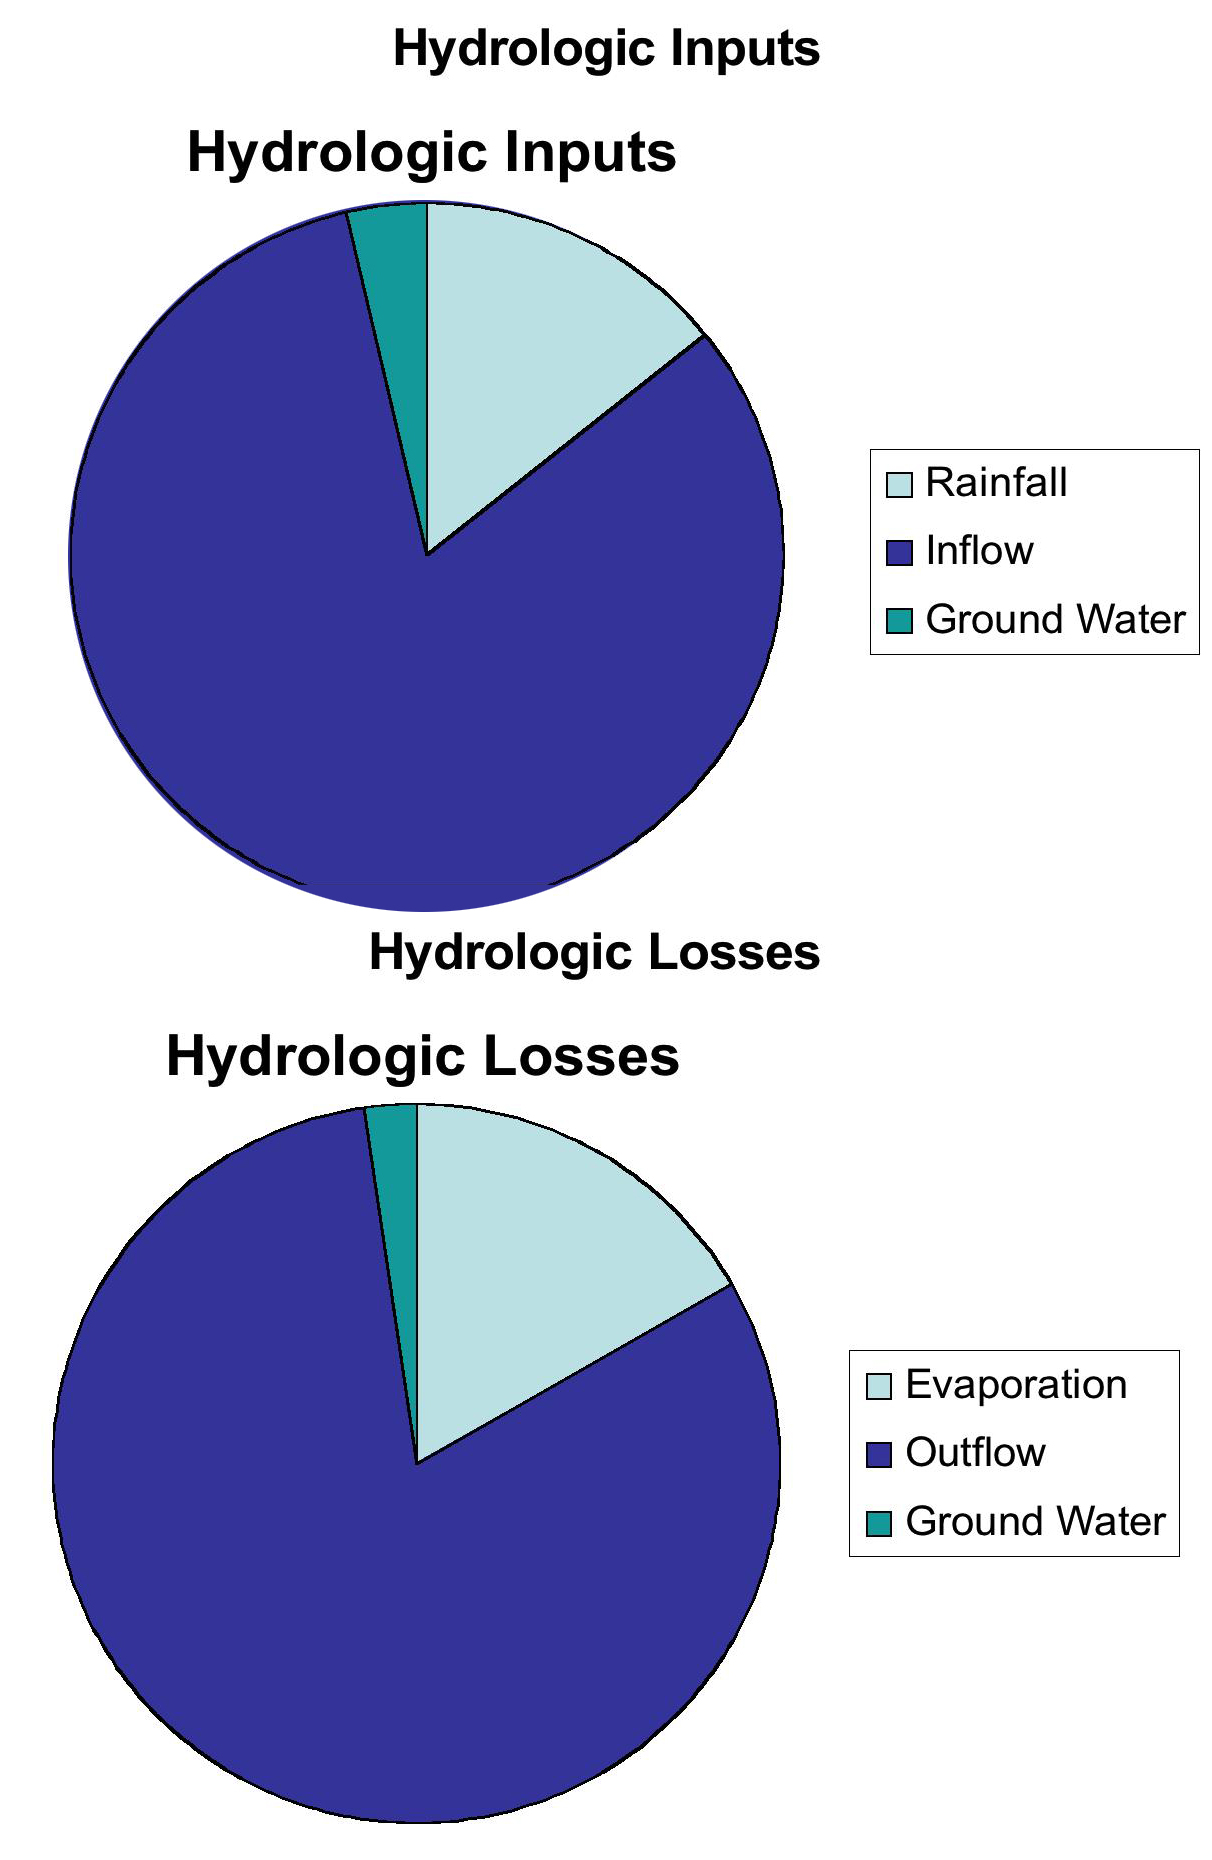 Hydrologic Losses and Inputs